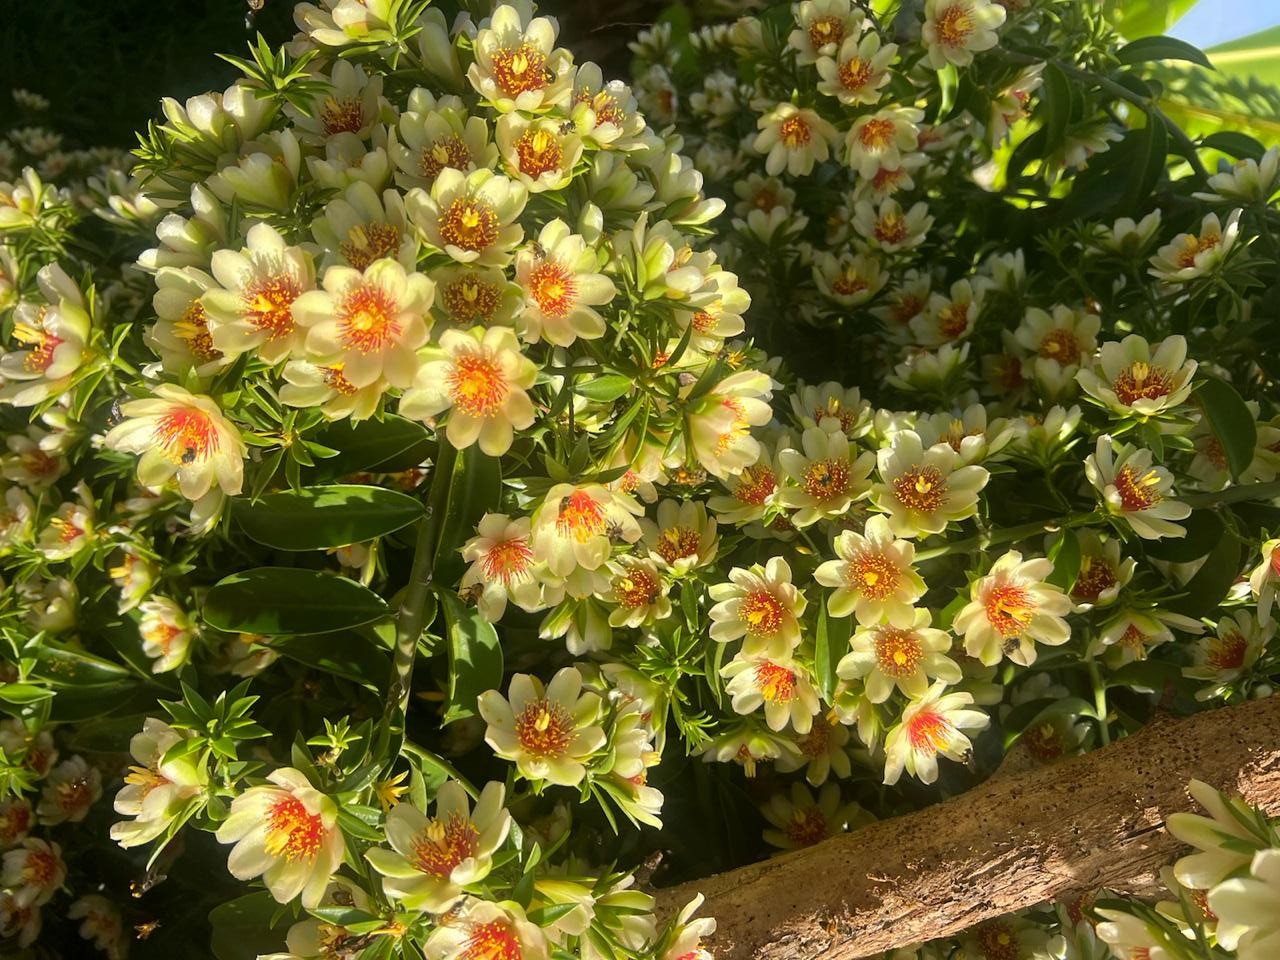 Vídeo: florada de ora-pro-nóbis encanta moradora de Campinas